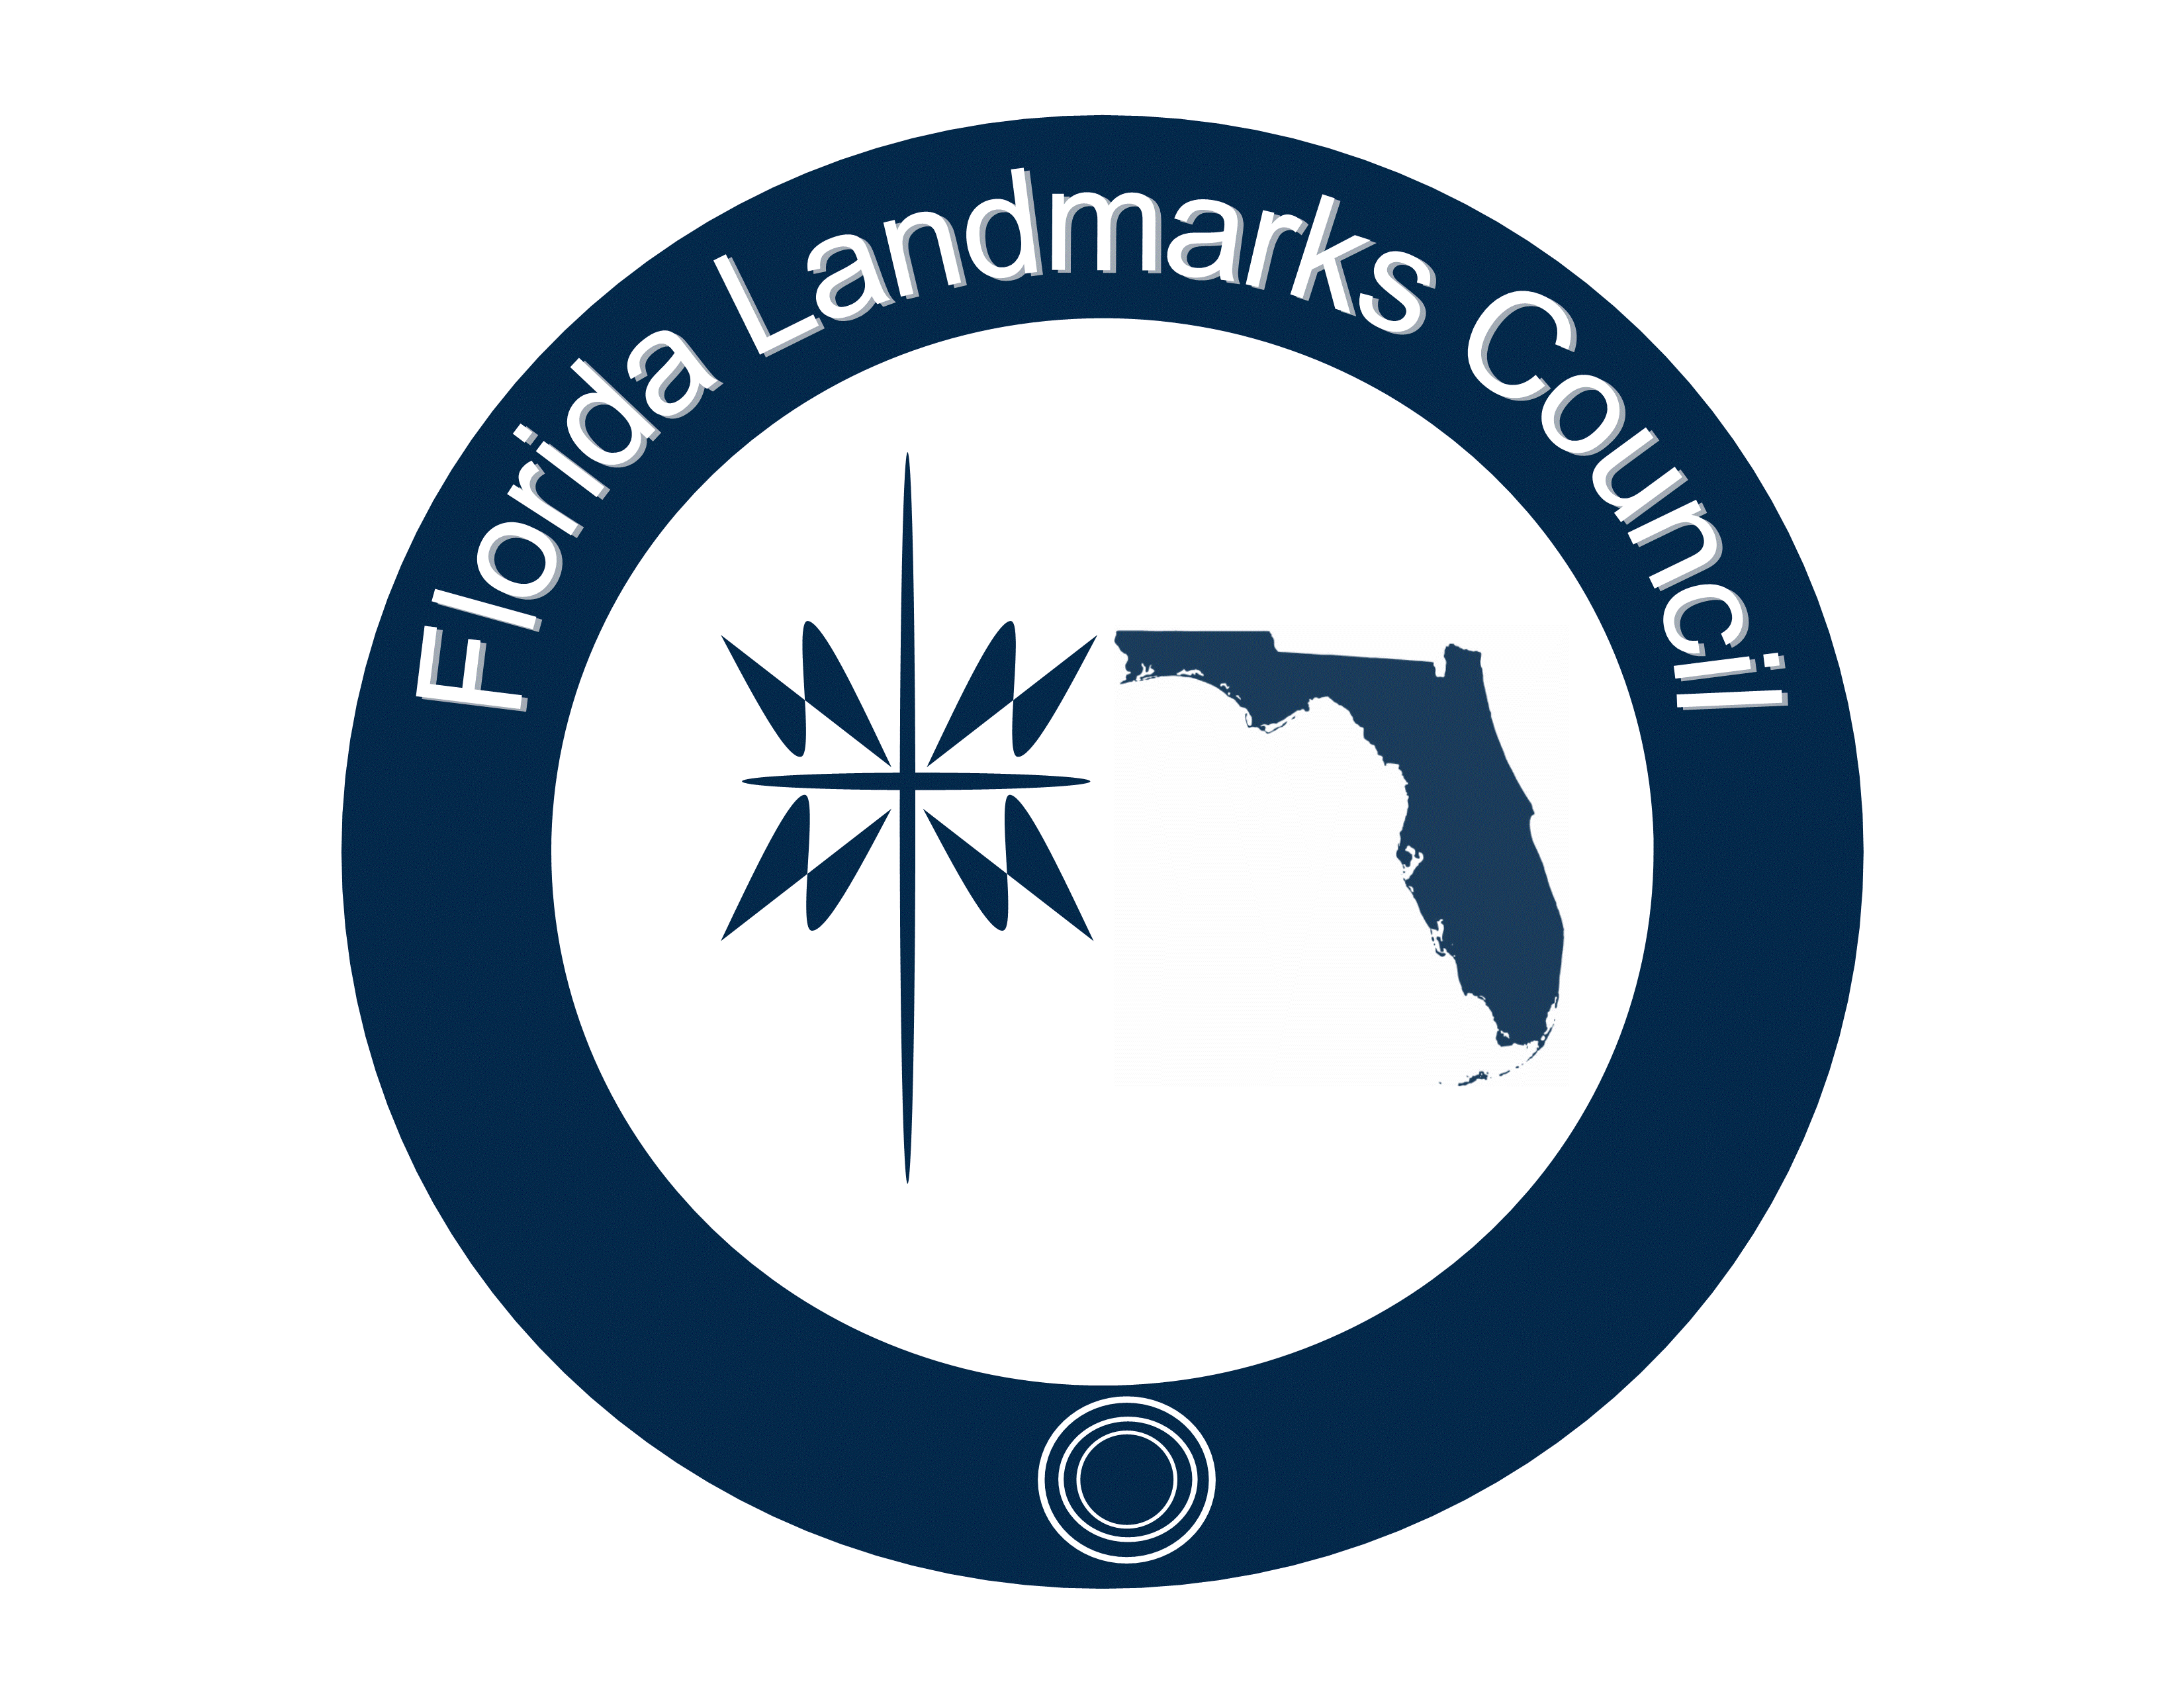 Smokey Hollow May 2018 The Florida Landmarks Council Historic Preservation